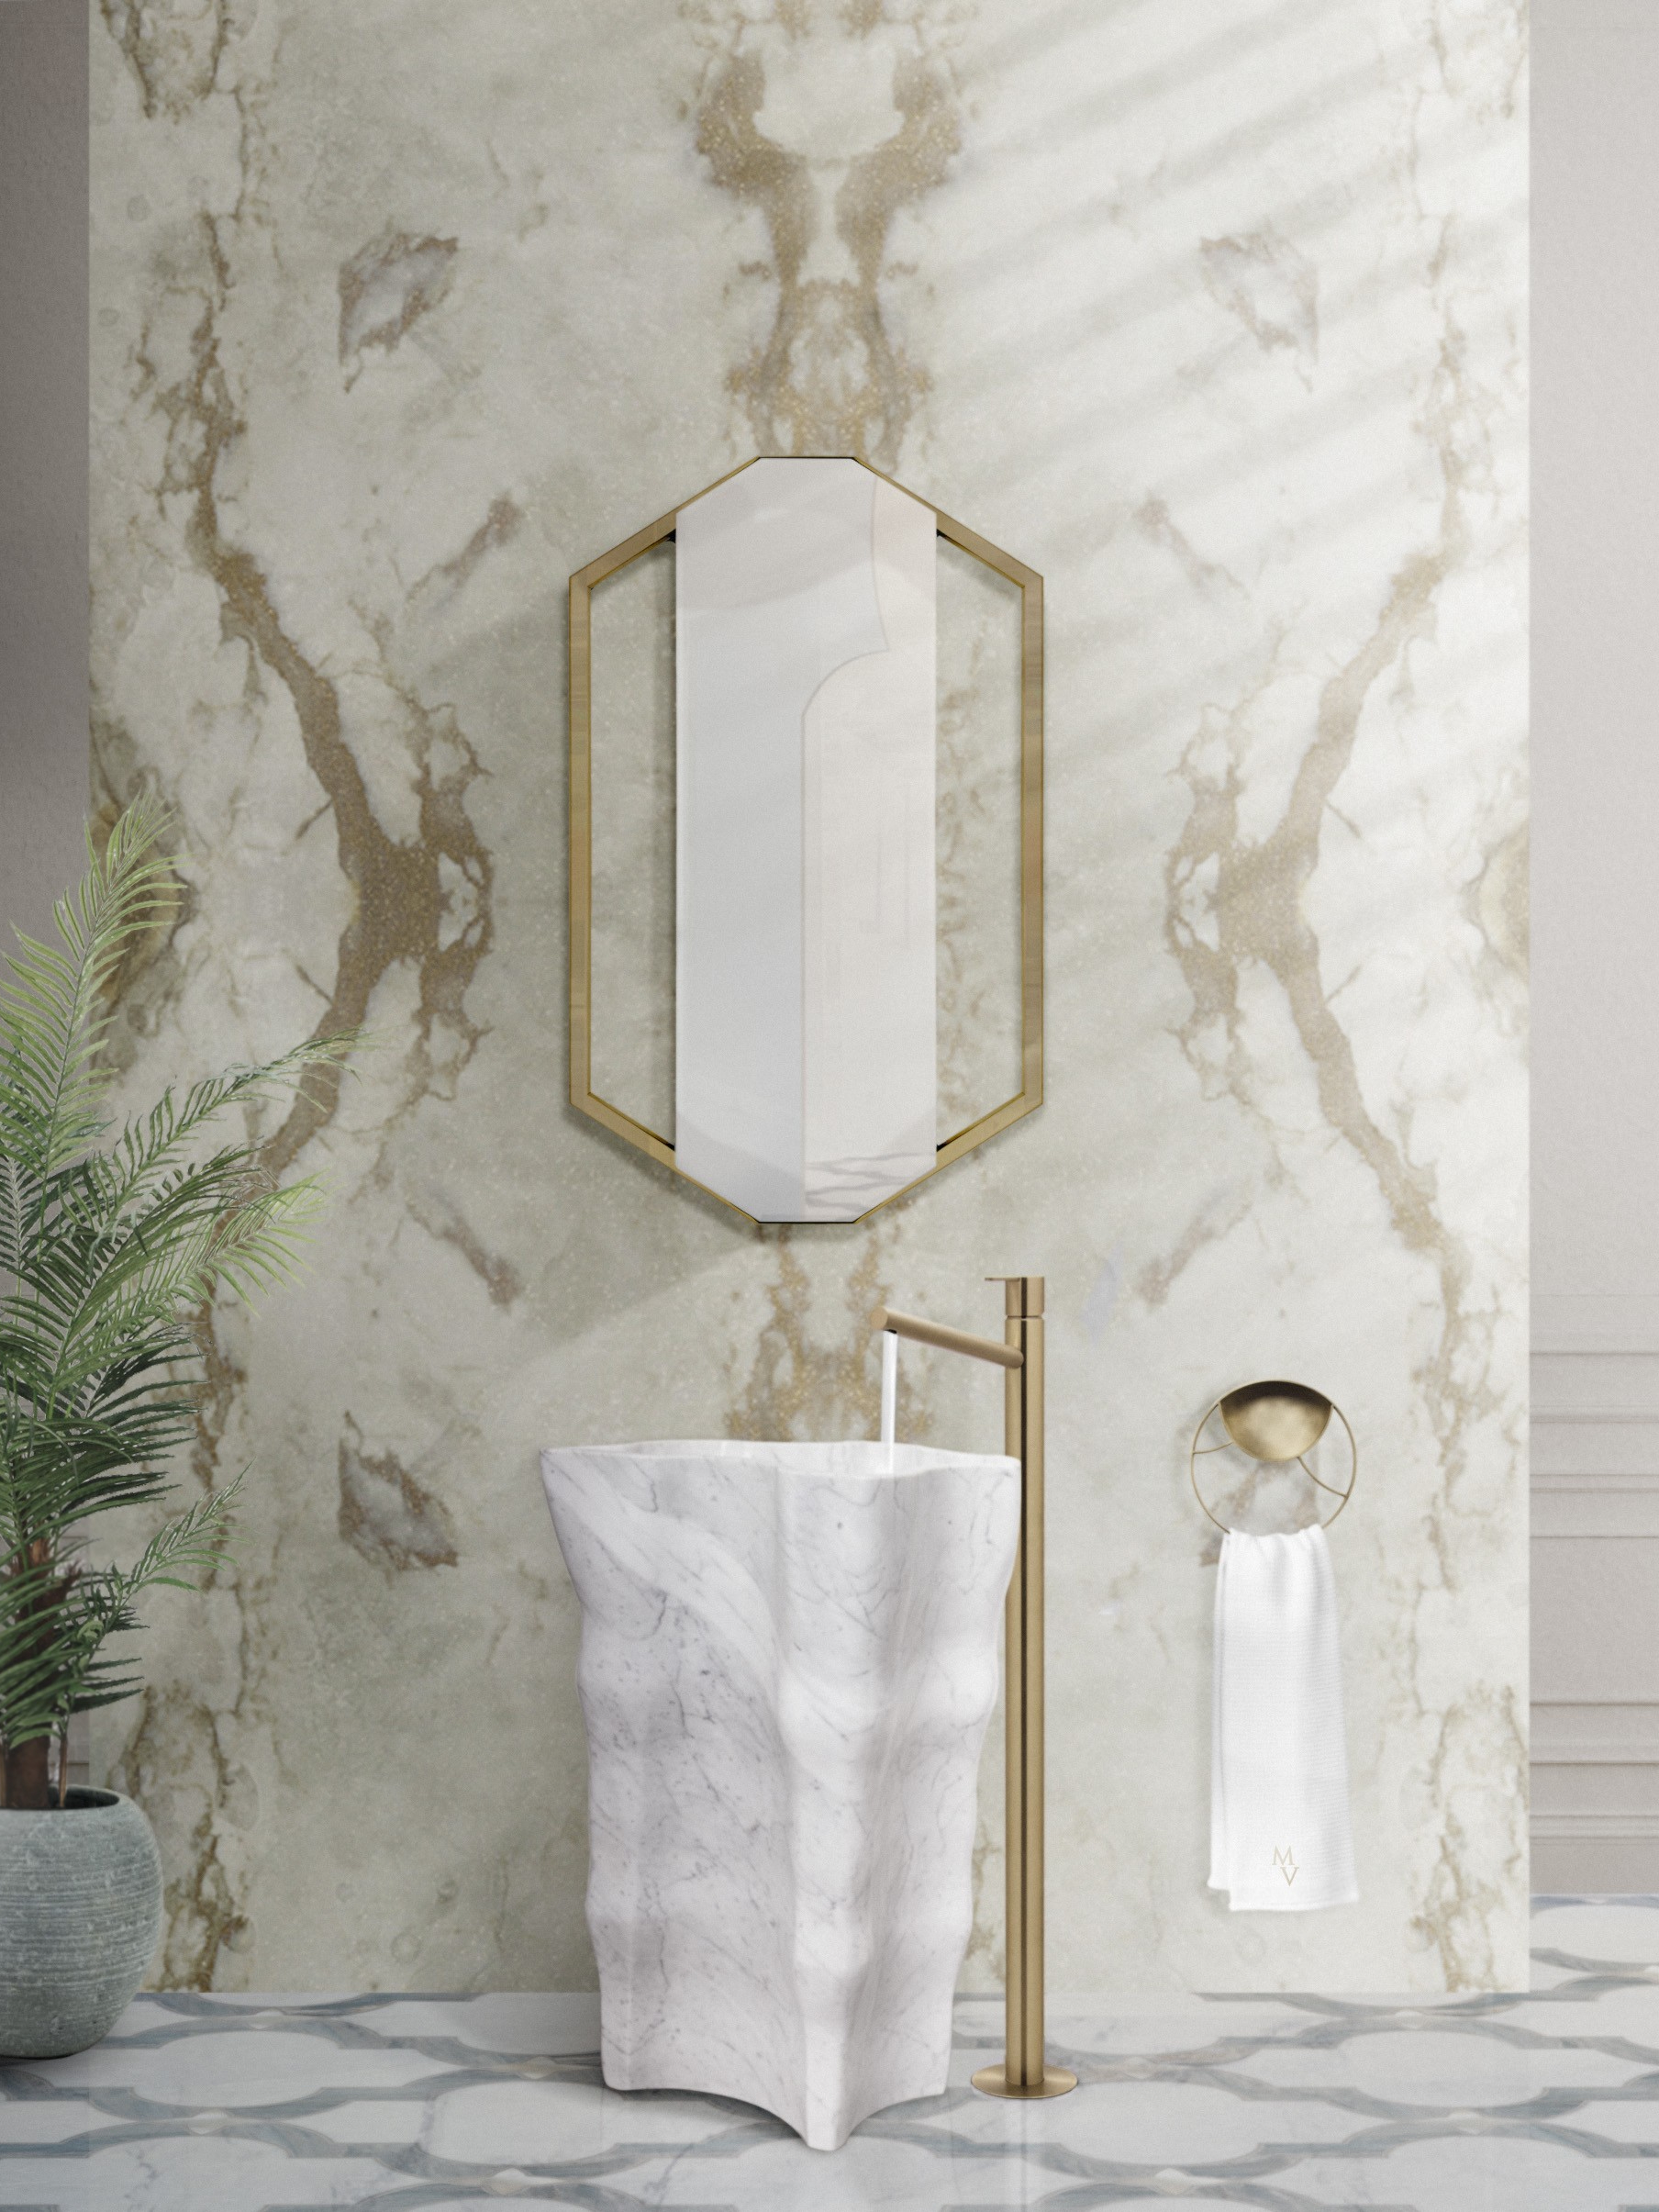 White Marble Bathroom Designs To Amaze - Home'Society